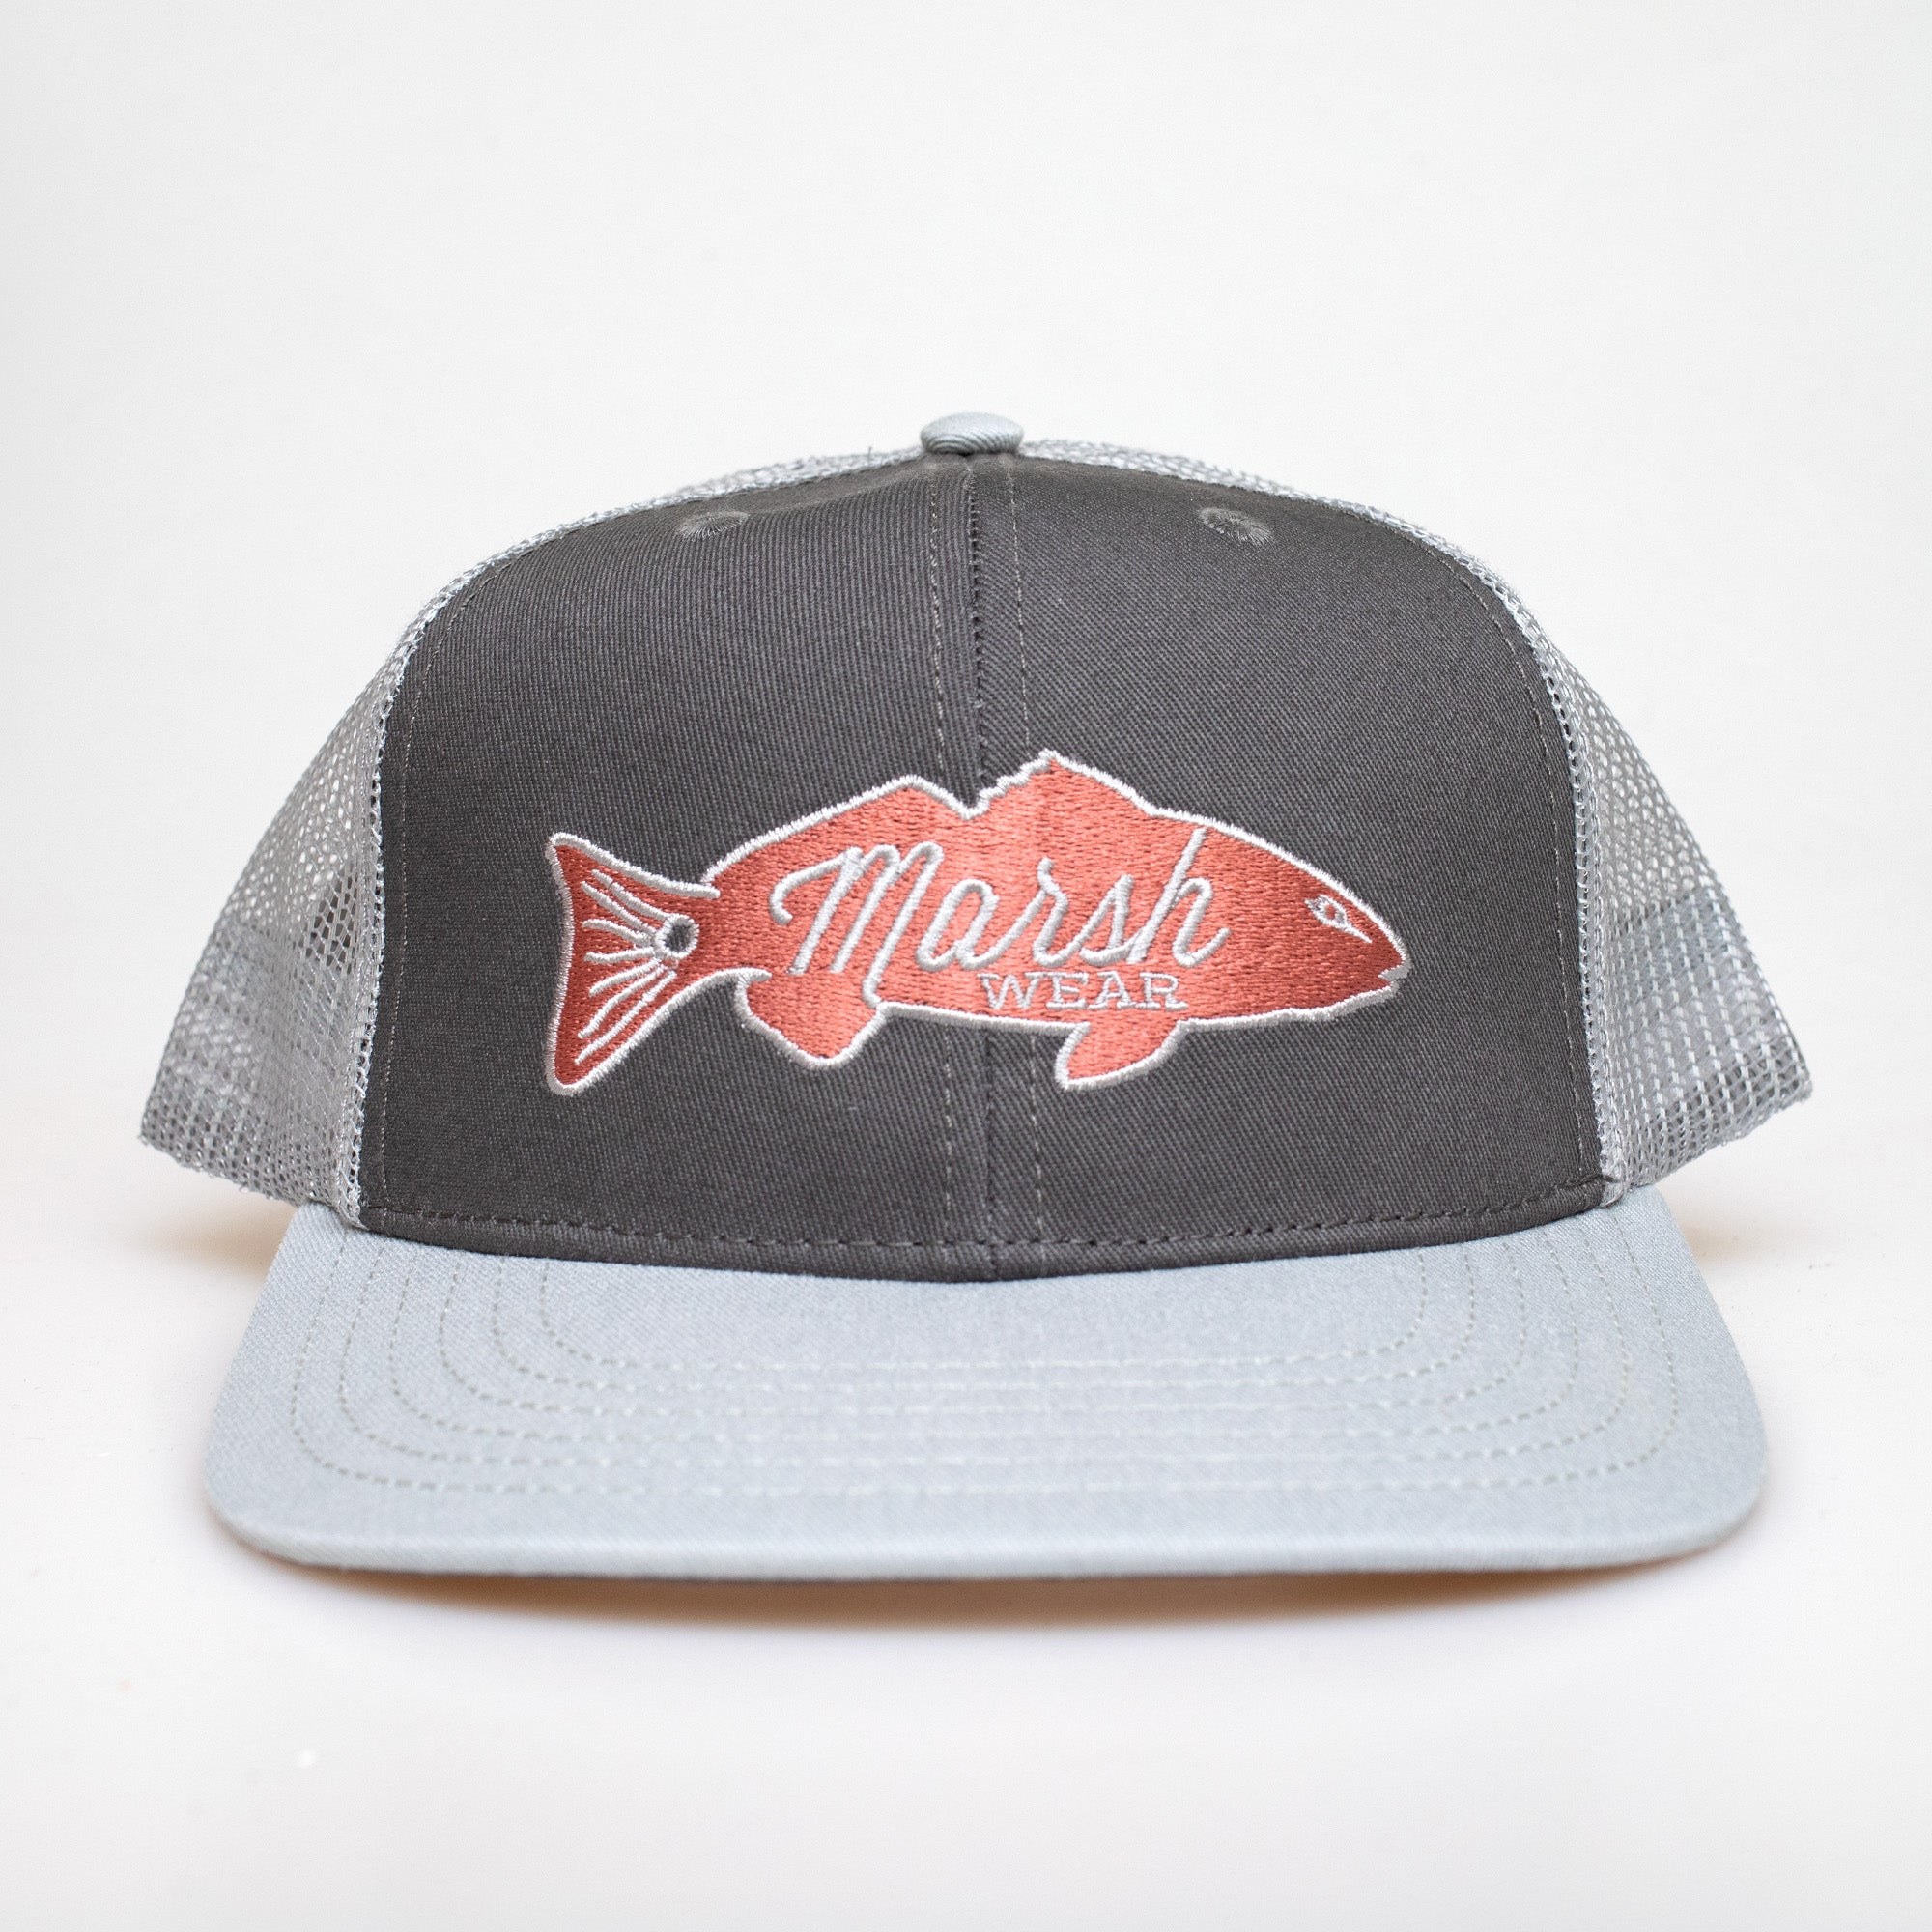 Marsh Wear Retro Redfish Logo Men's Trucker Hat